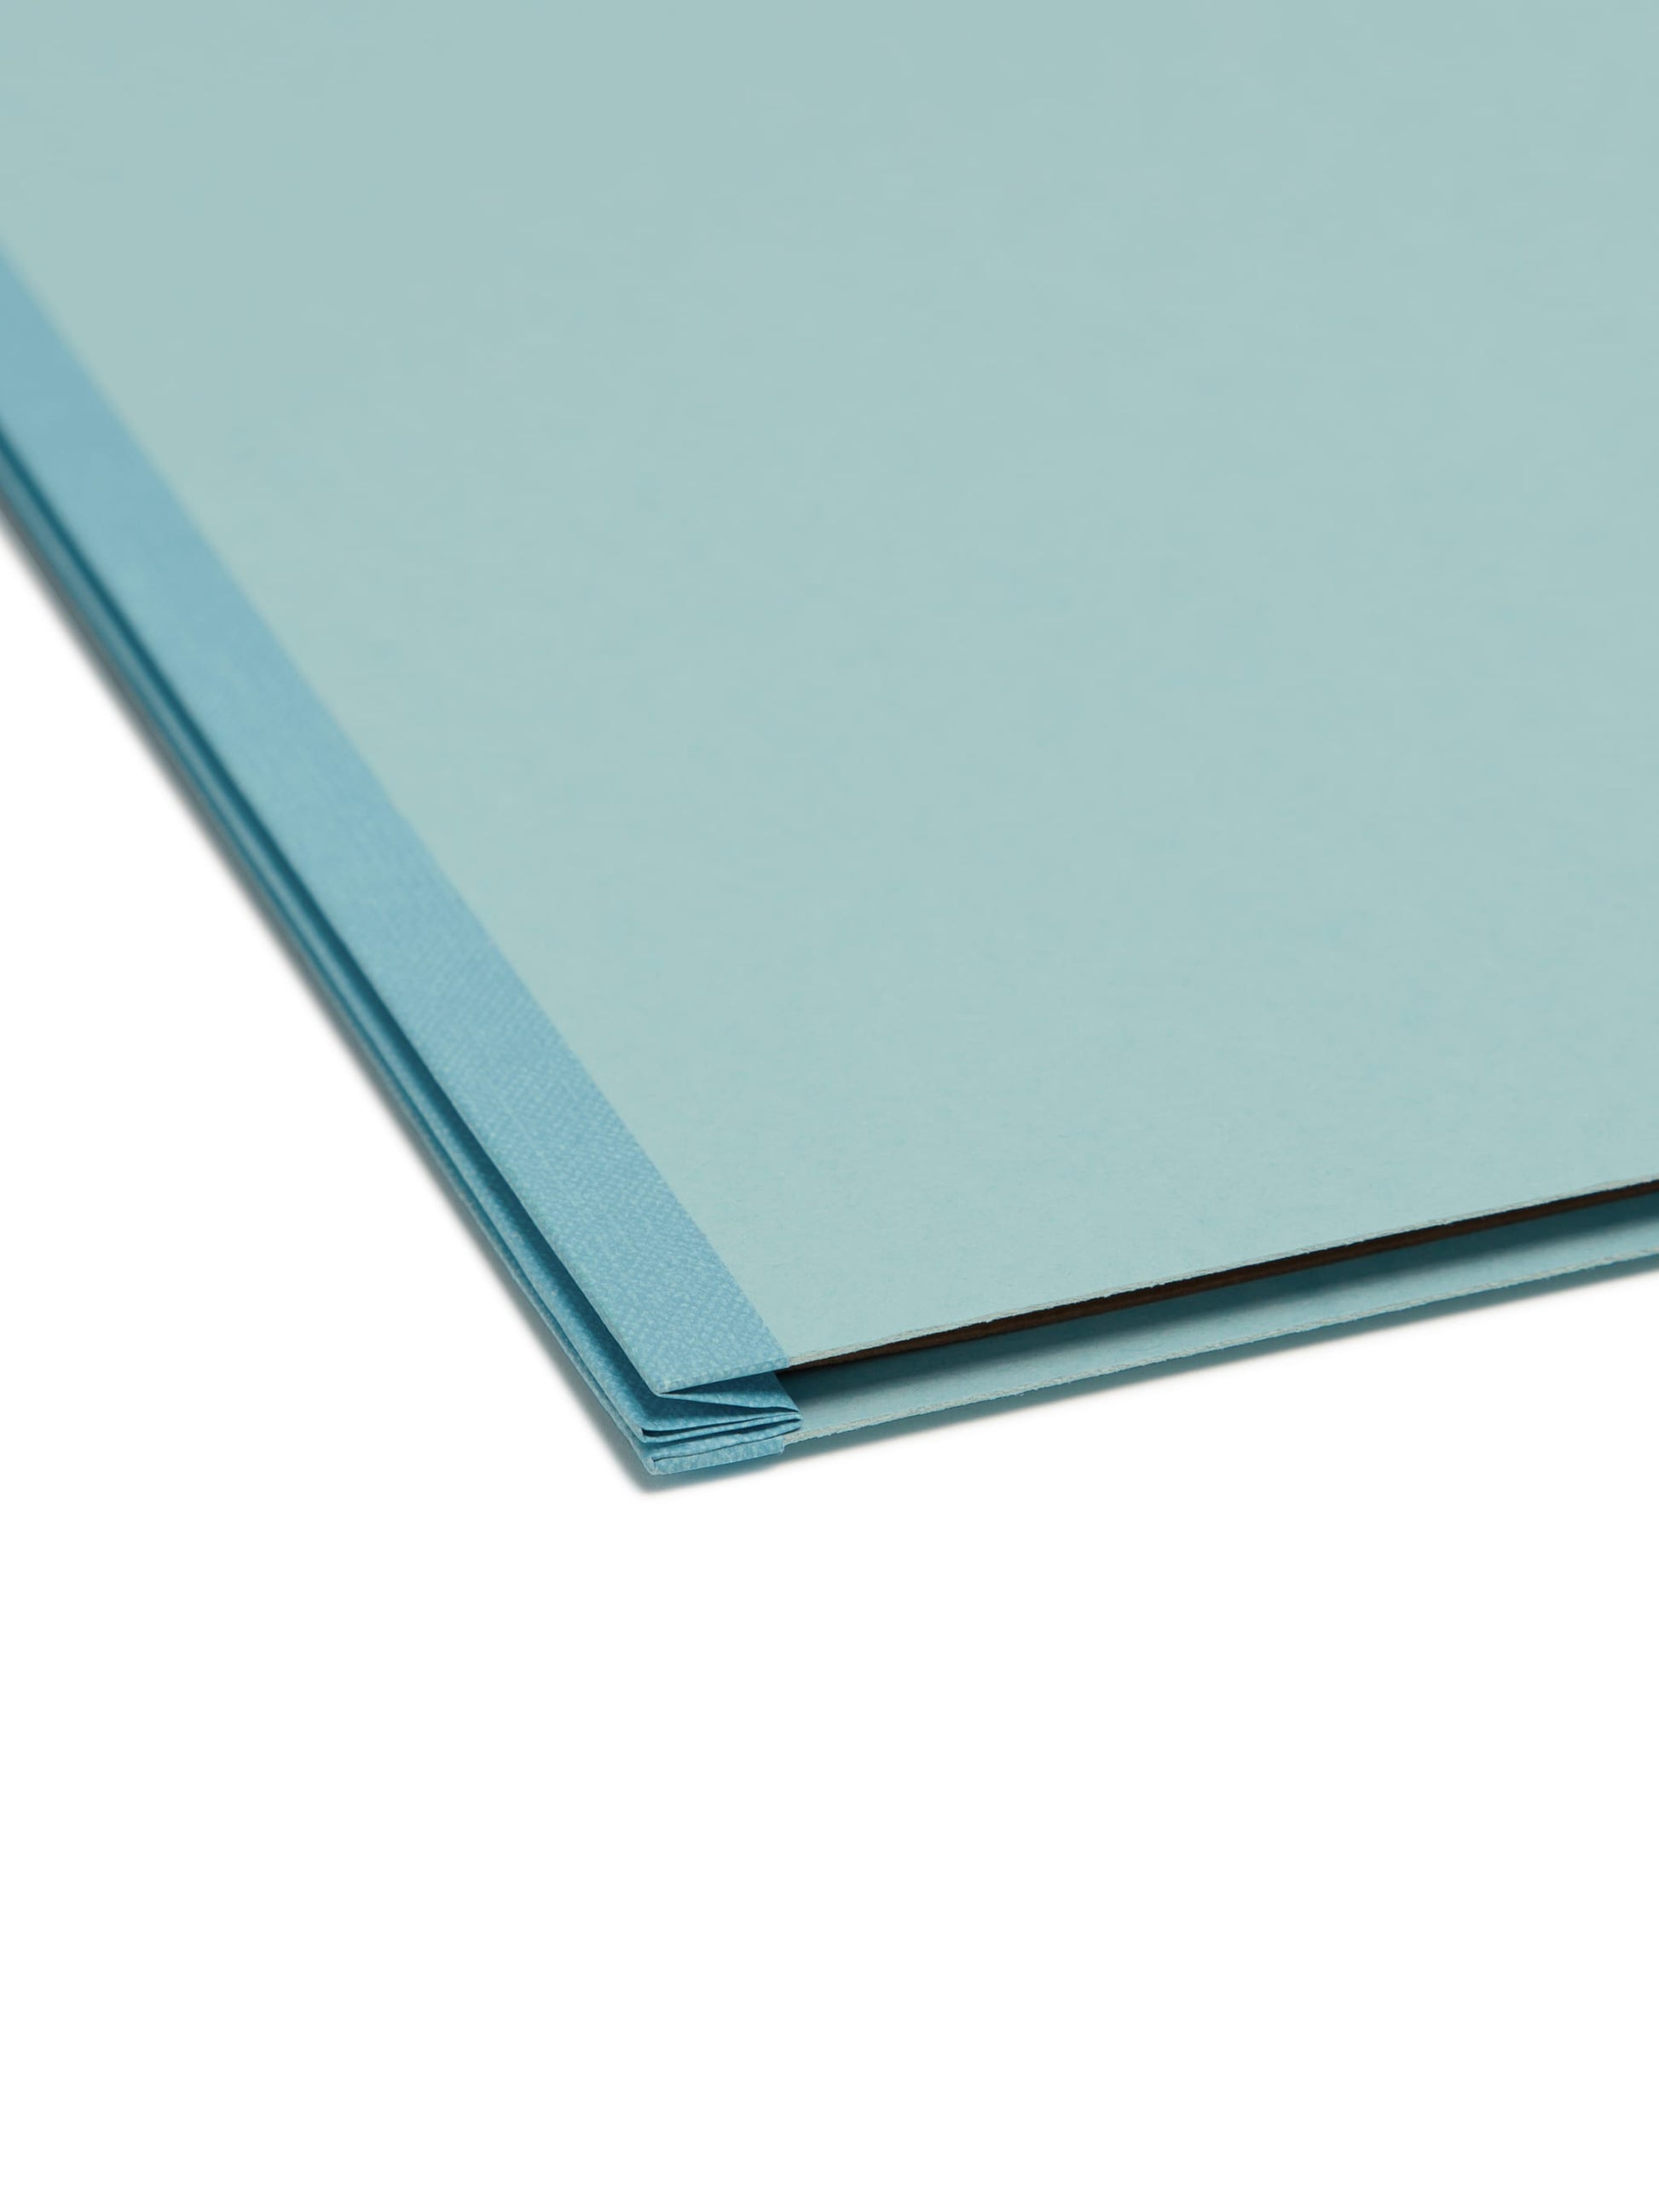 Pressboard Classification File Folders, 2 Dividers, 2 inch Expansion, Blue Color, Letter Size, Set of 0, 30086486140219